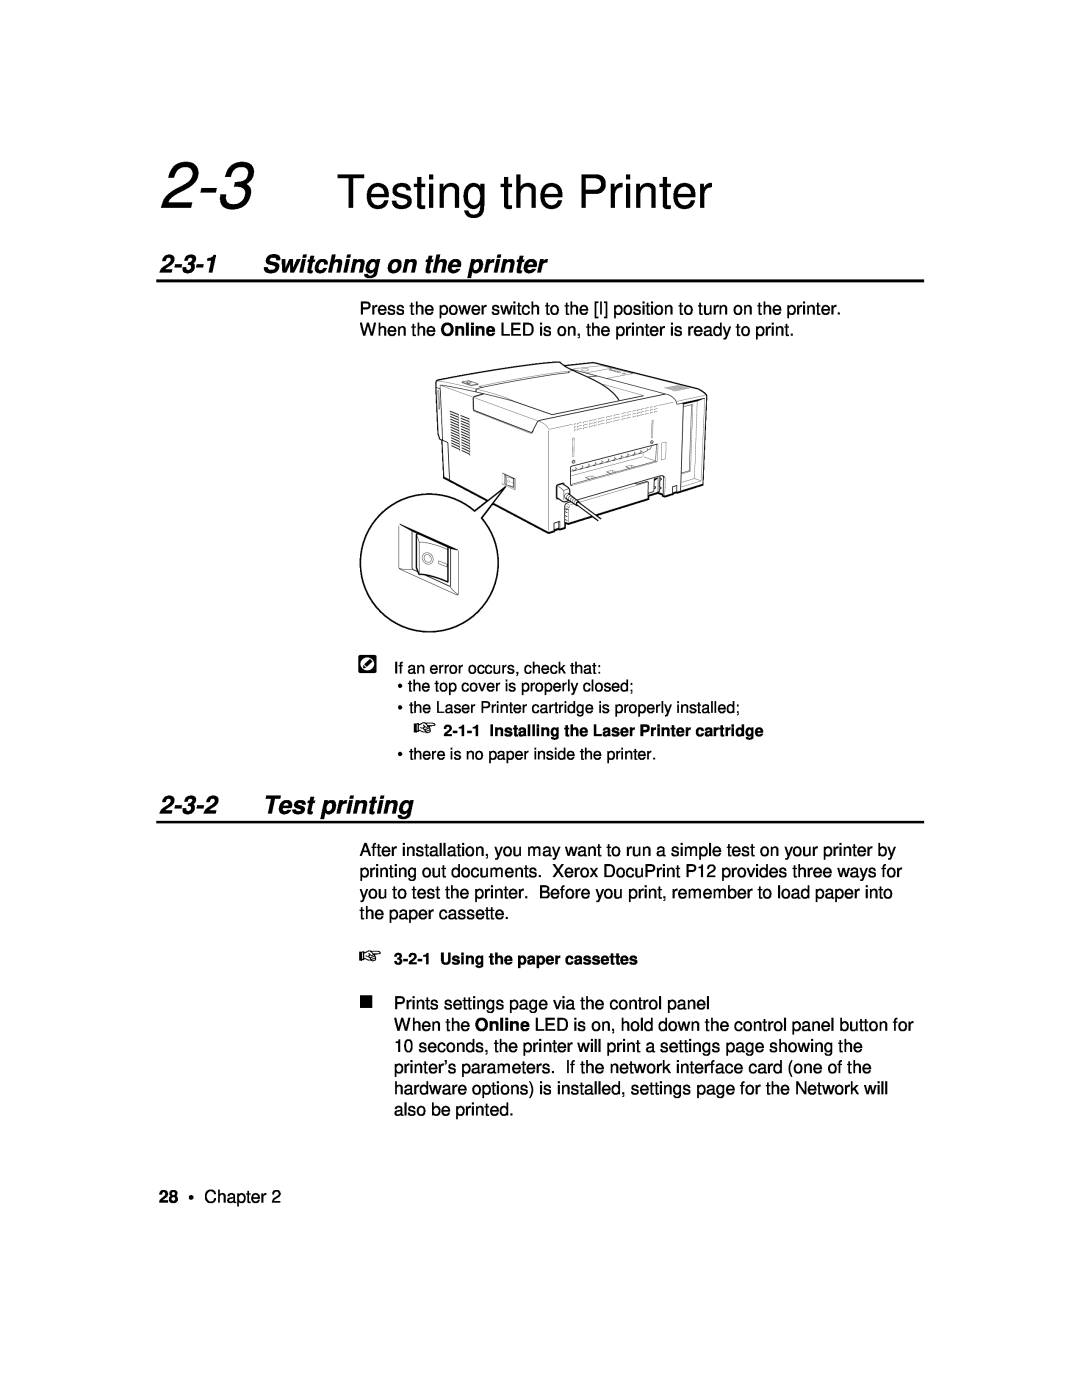 Xerox P12 manual Testing the Printer, Switching on the printer, Test printing 